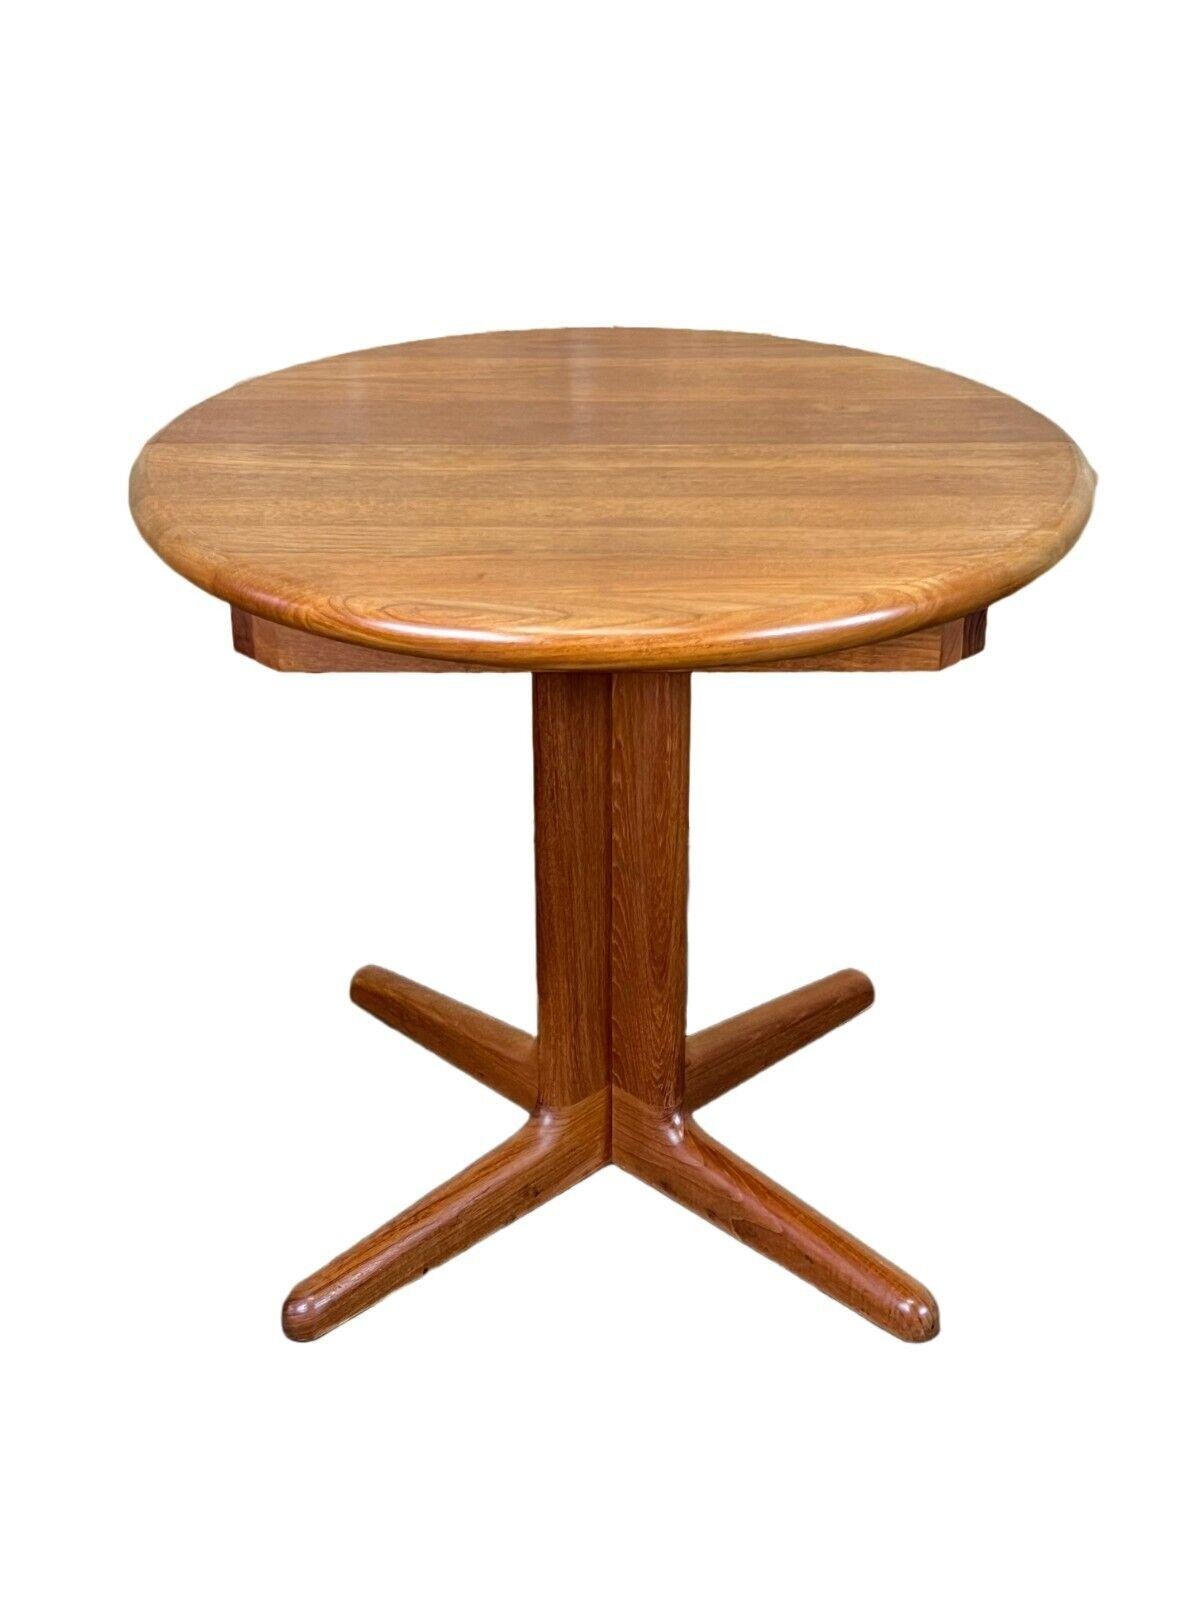 1960s-1970s teak dining table side table Korup design Danish Denmark

Object: dining table

Manufacturer: Korup

Condition: good - vintage

Age: around 1960-1970

Dimensions:

Diameter = 79cm
Height = 72cm
Shelf = 40cm

Other